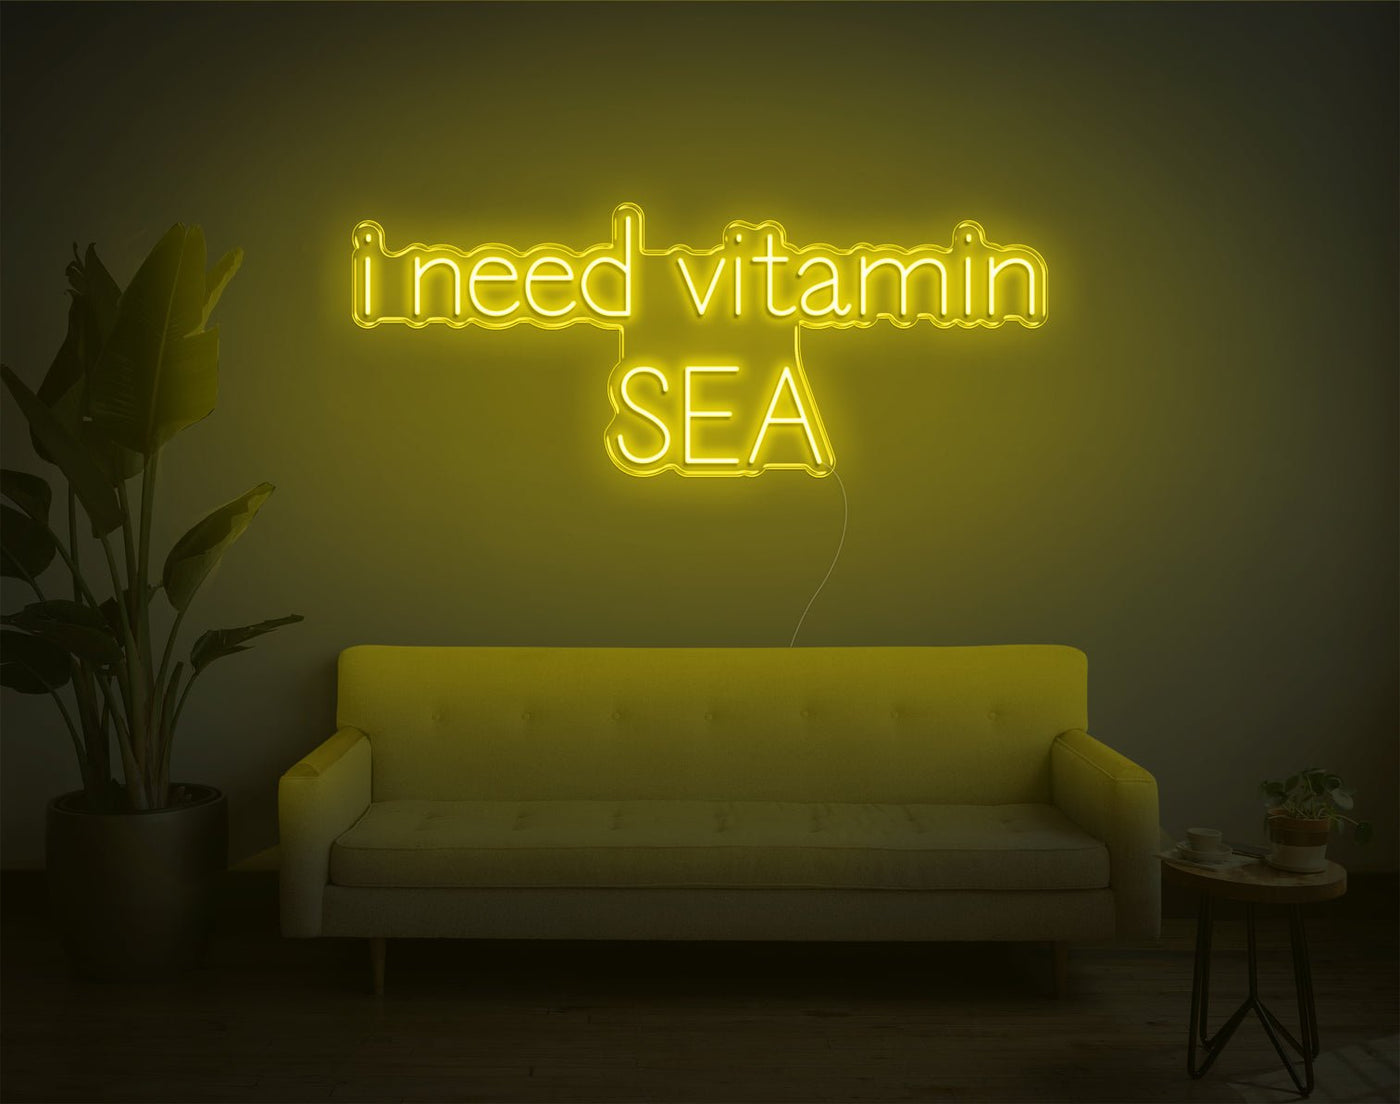 I Need Vitamin Sea LED Neon Sign - 17inch x 43inchYellow